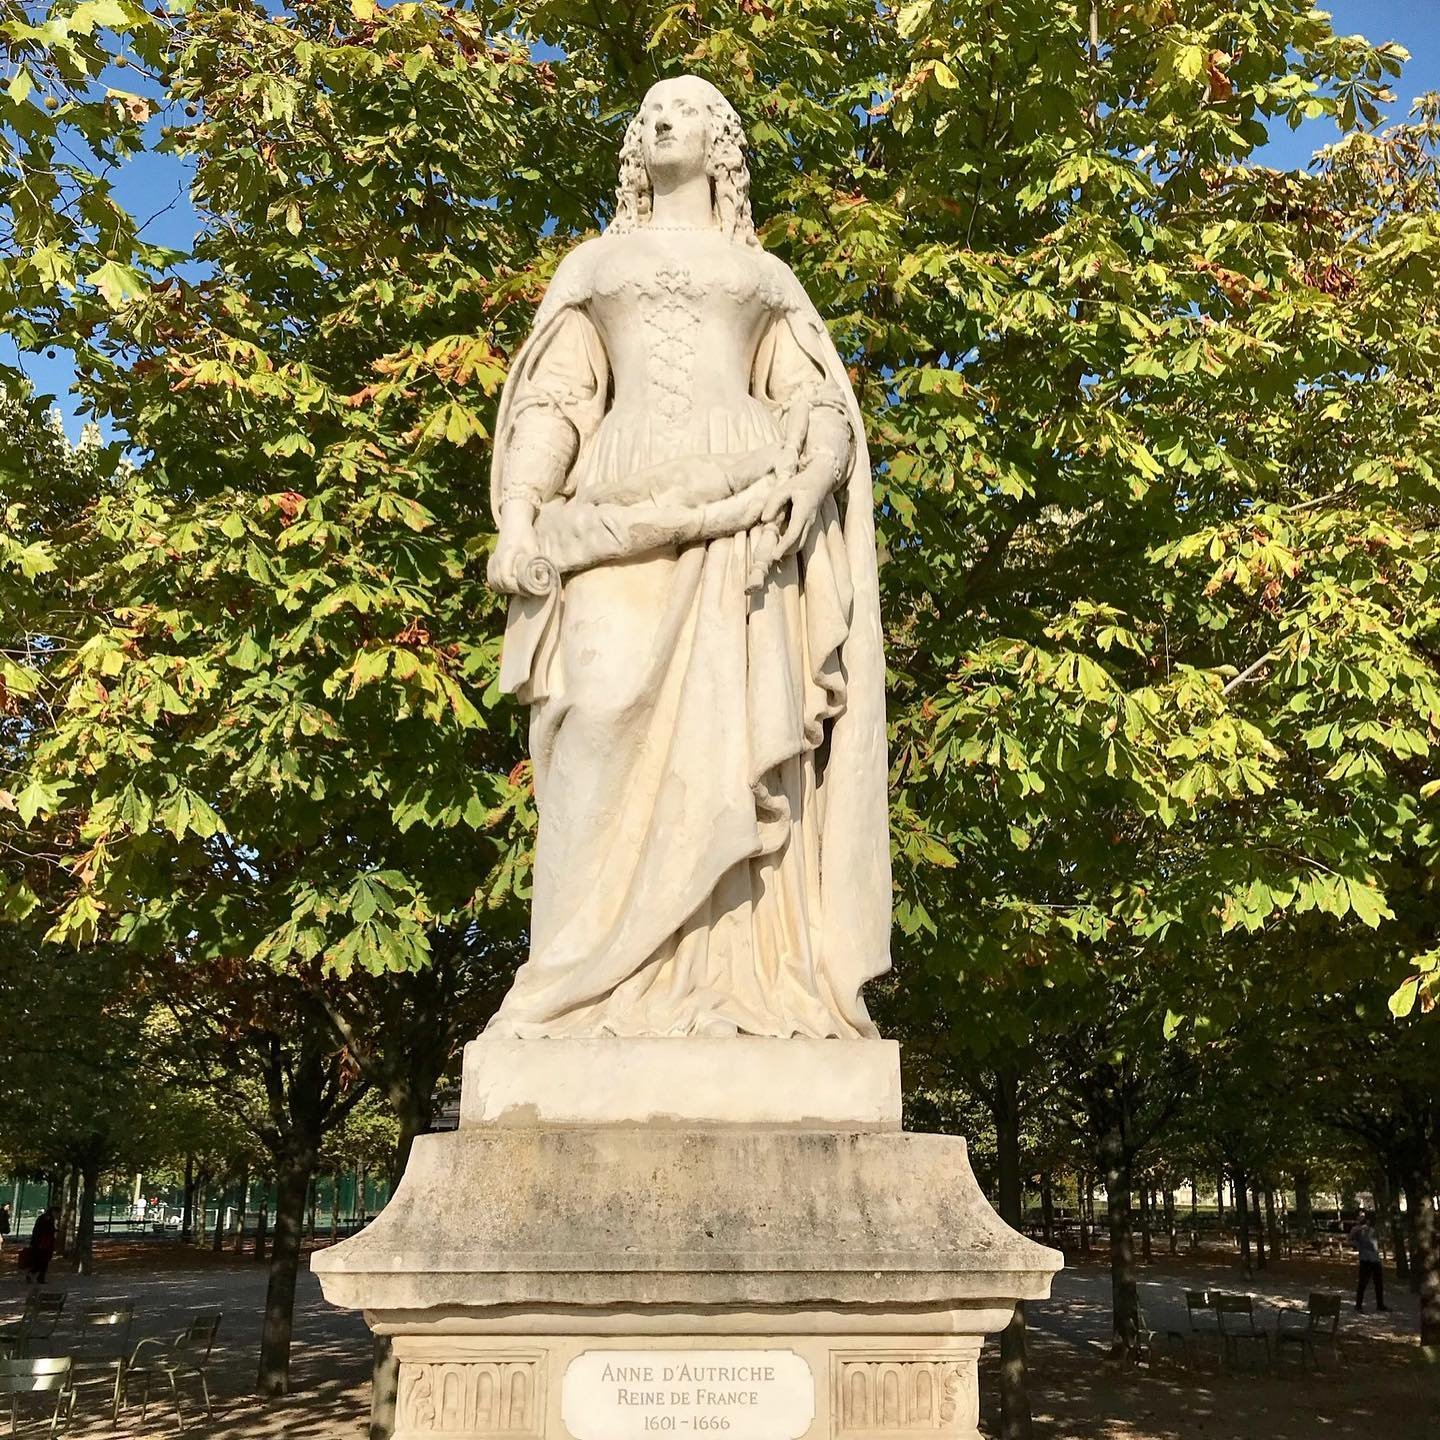 Anne-Autriche-Statue-Luxembourg-Gardens.jpg